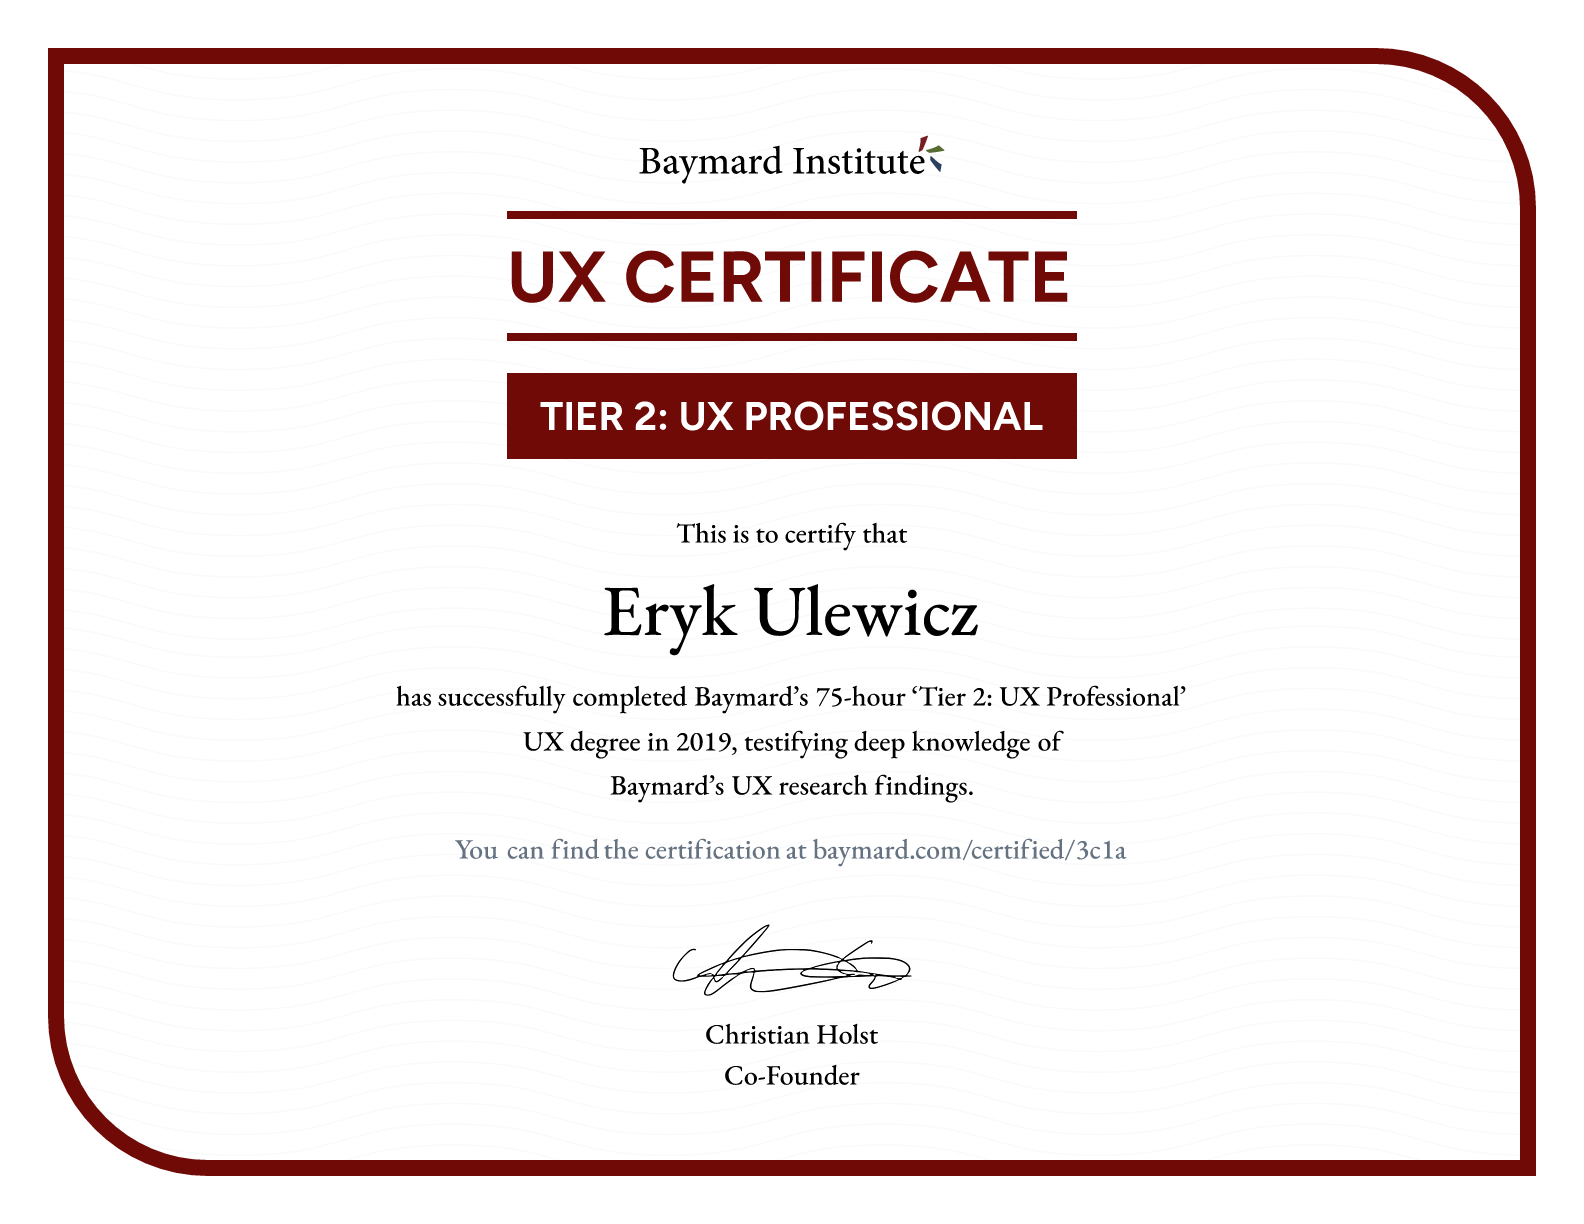 Eryk Ulewicz’s certificate